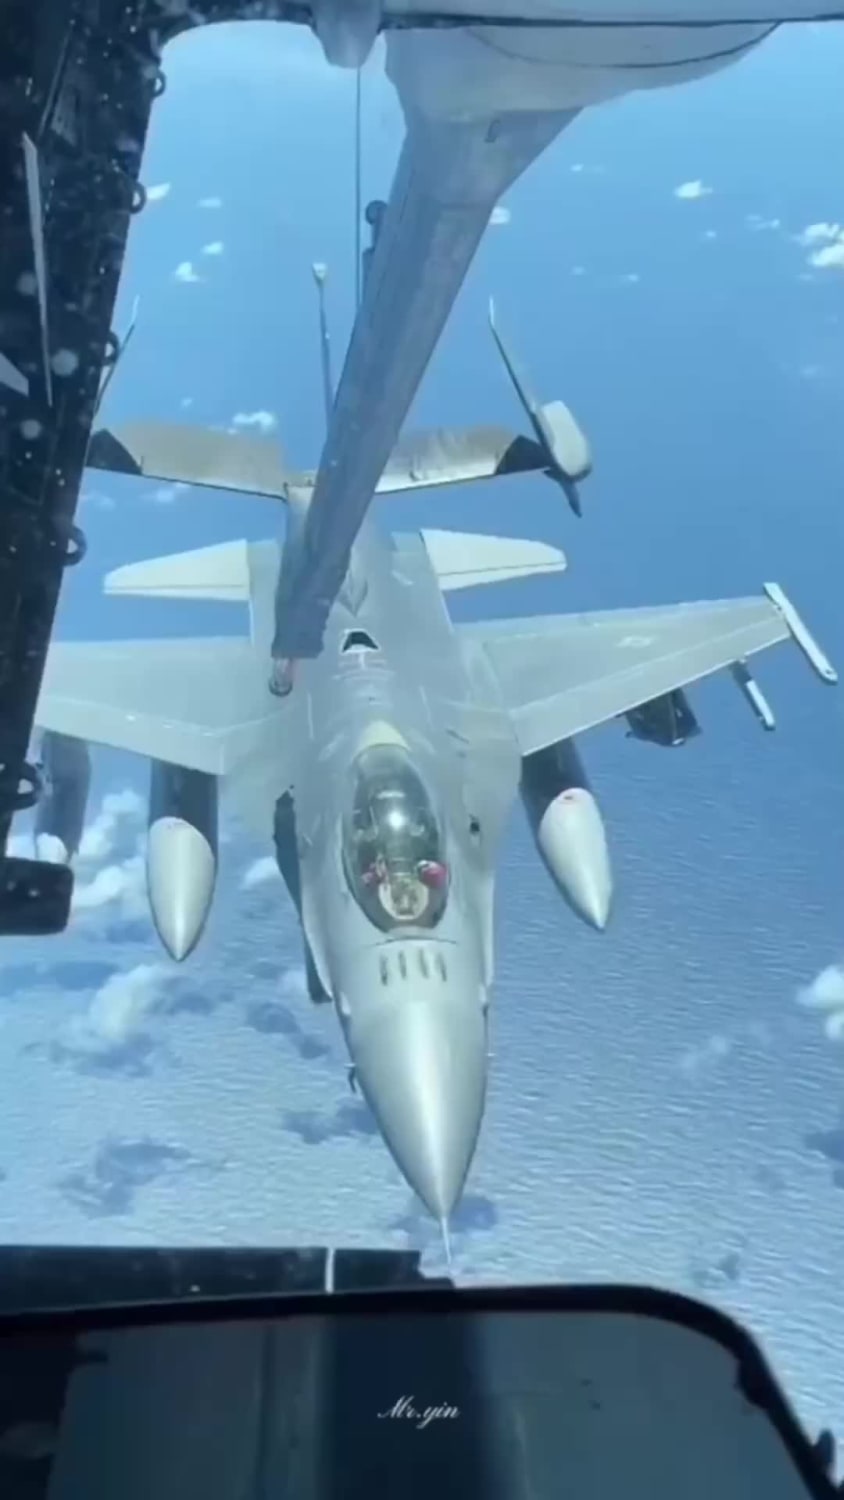 F-16air/flight refuelling#f16#warcraft